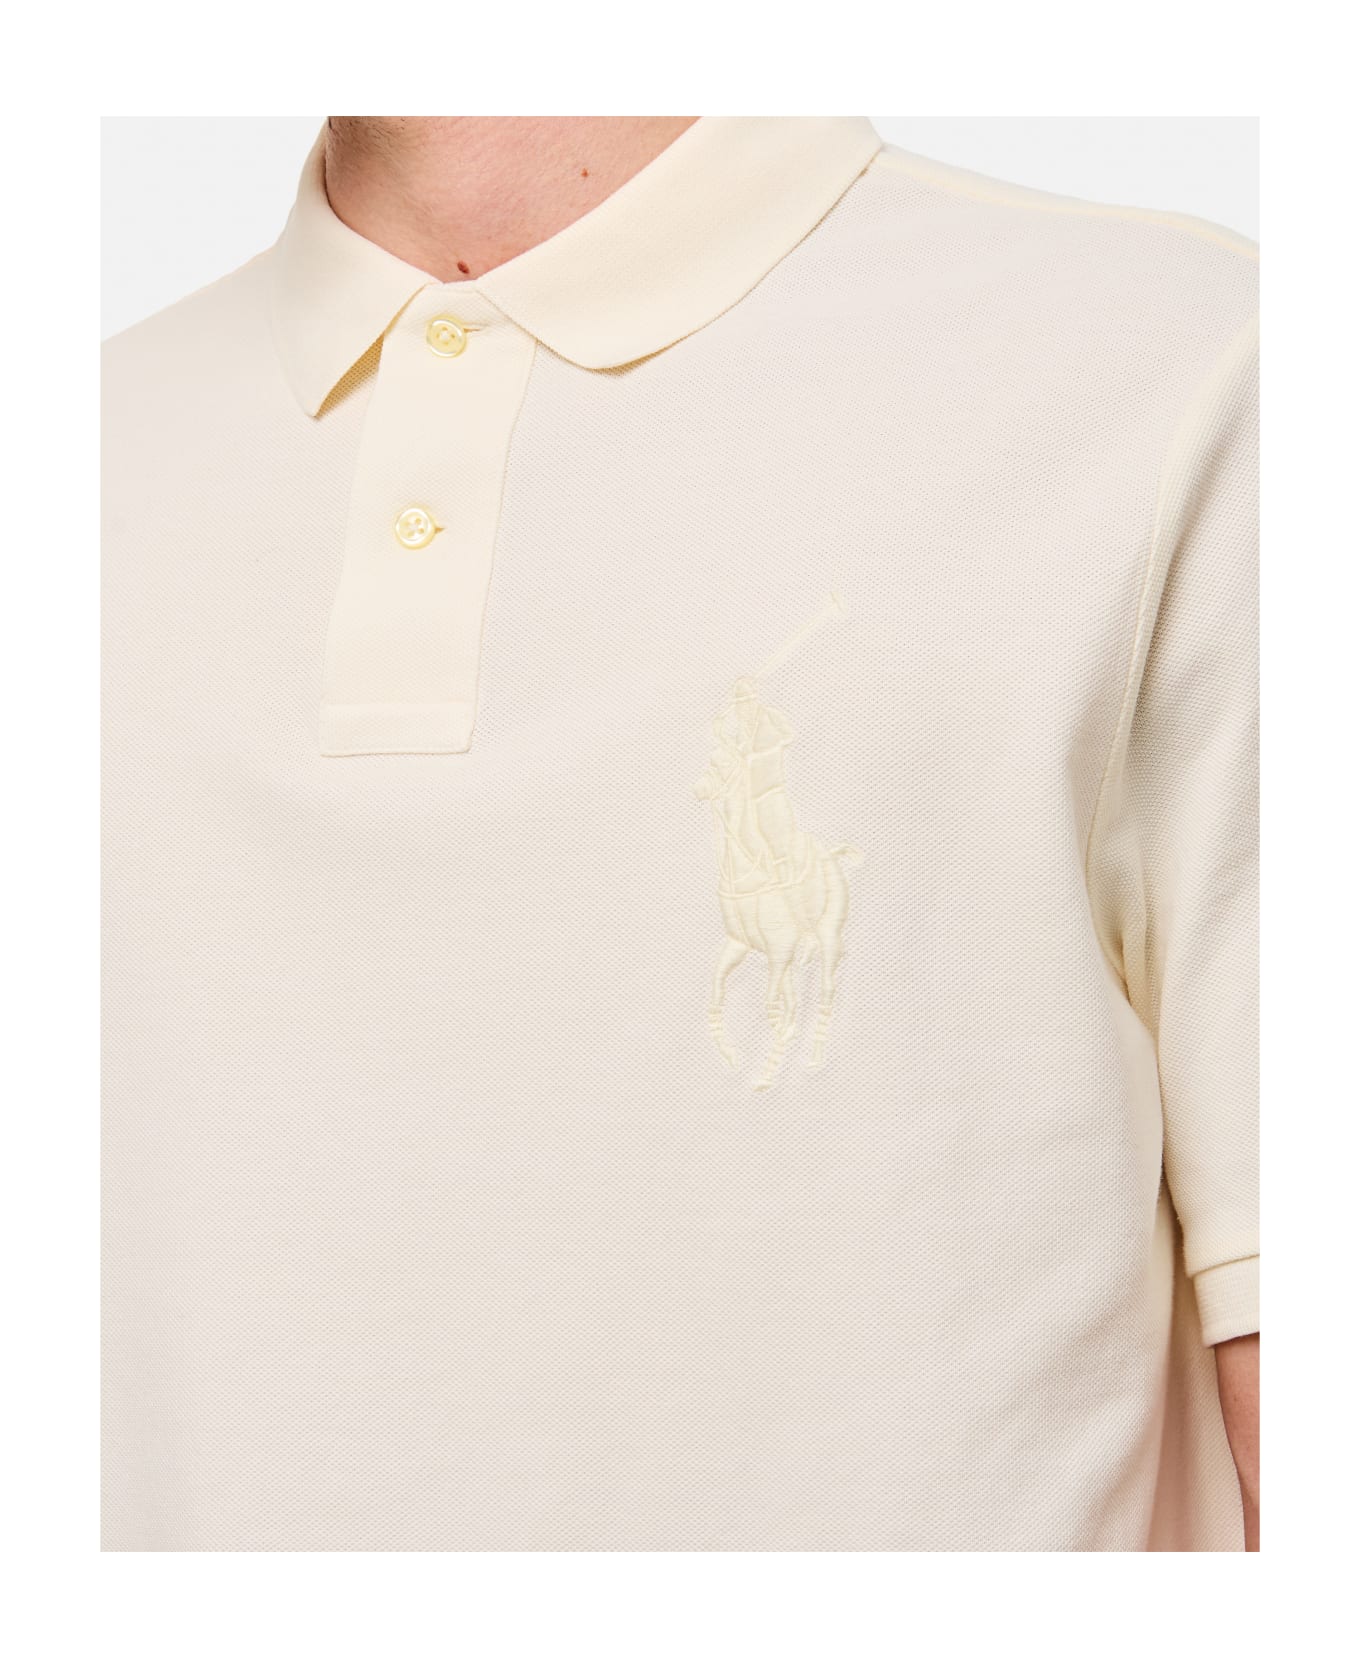 Polo Ralph Lauren Polo Shirt - White ポロシャツ